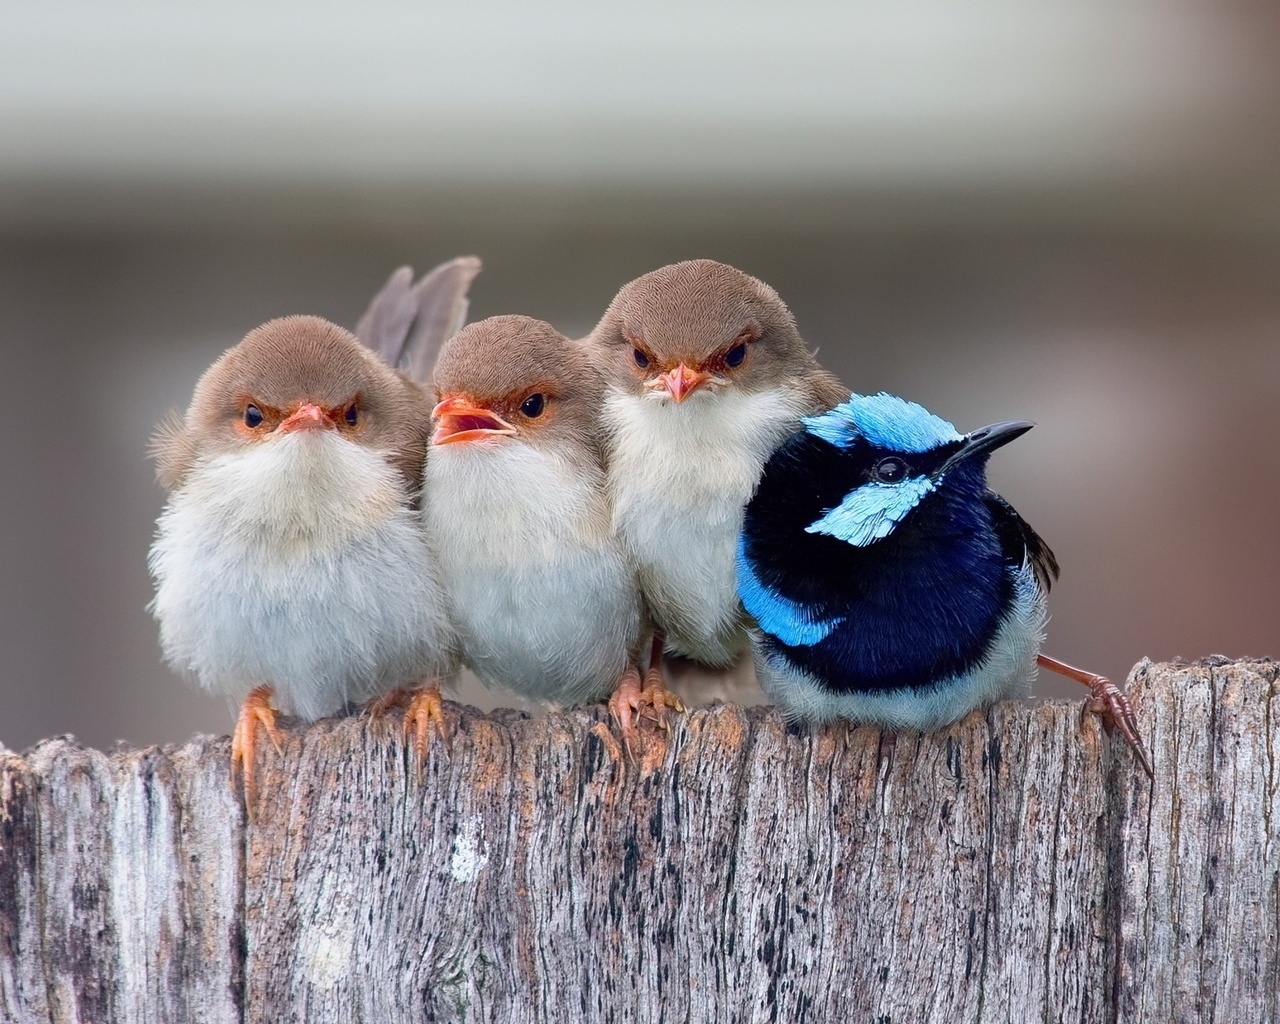 Cute Little Birds for 1280 x 1024 resolution